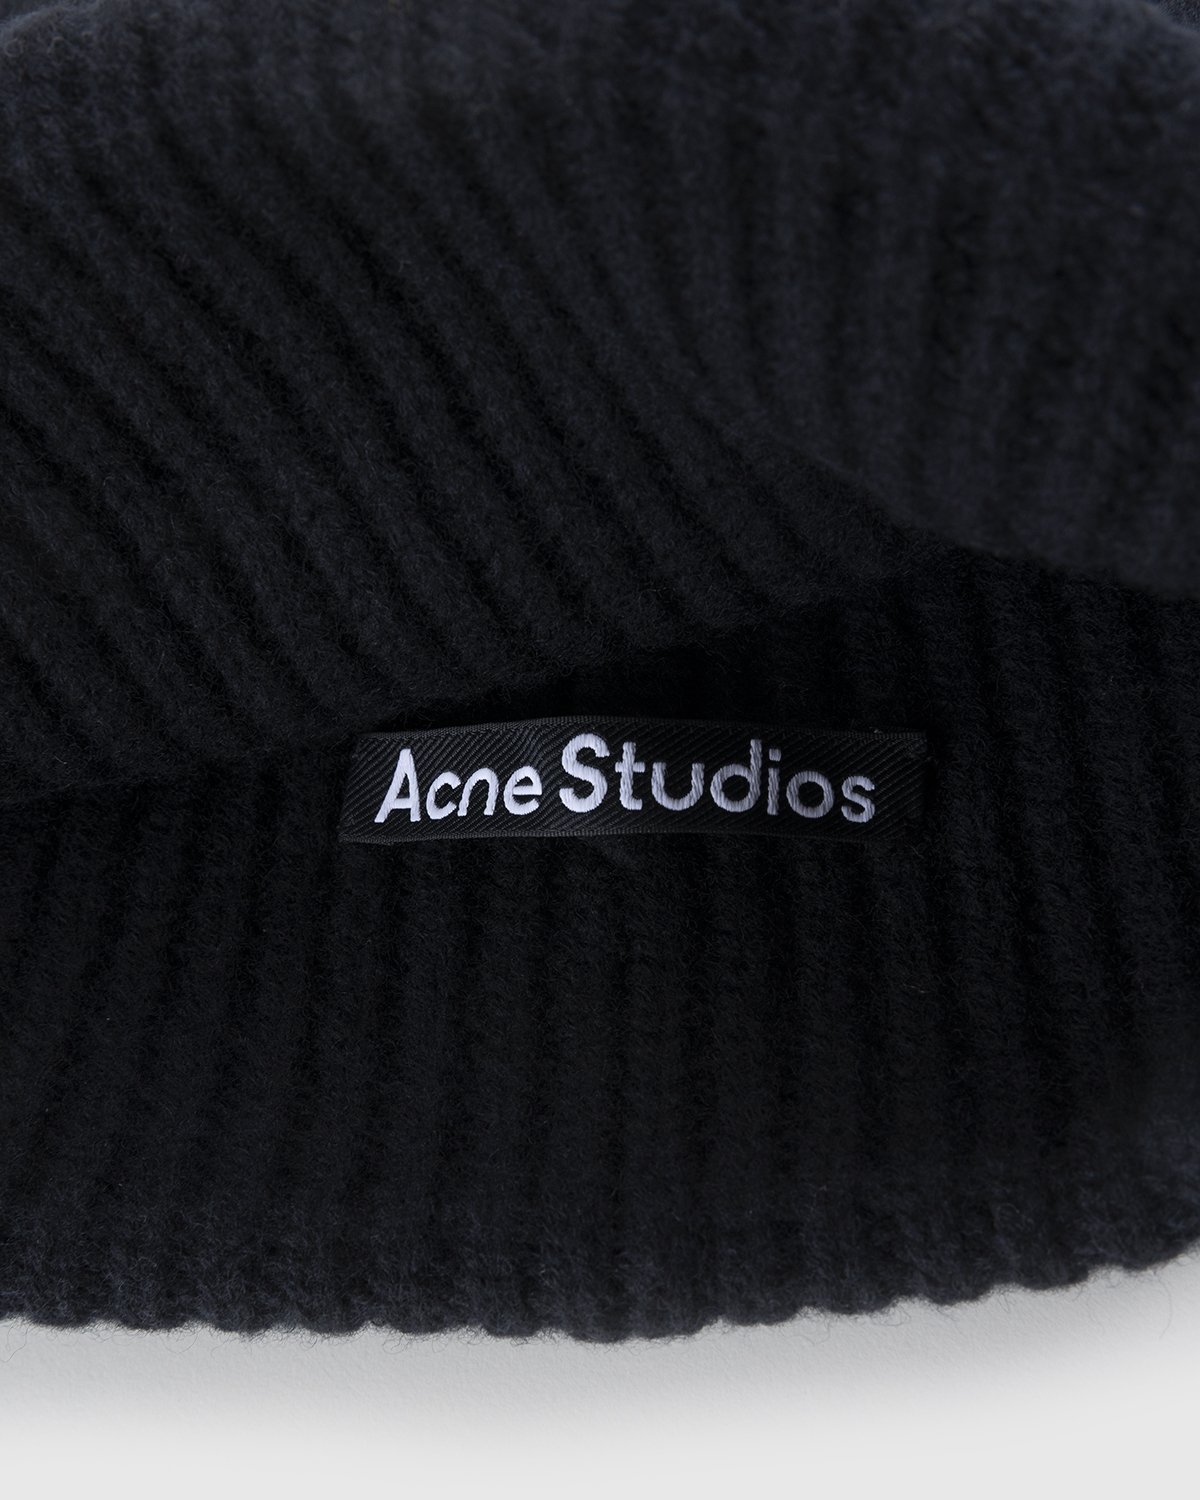 Acne Studios - Large Face Logo Beanie Black - Accessories - Black - Image 4